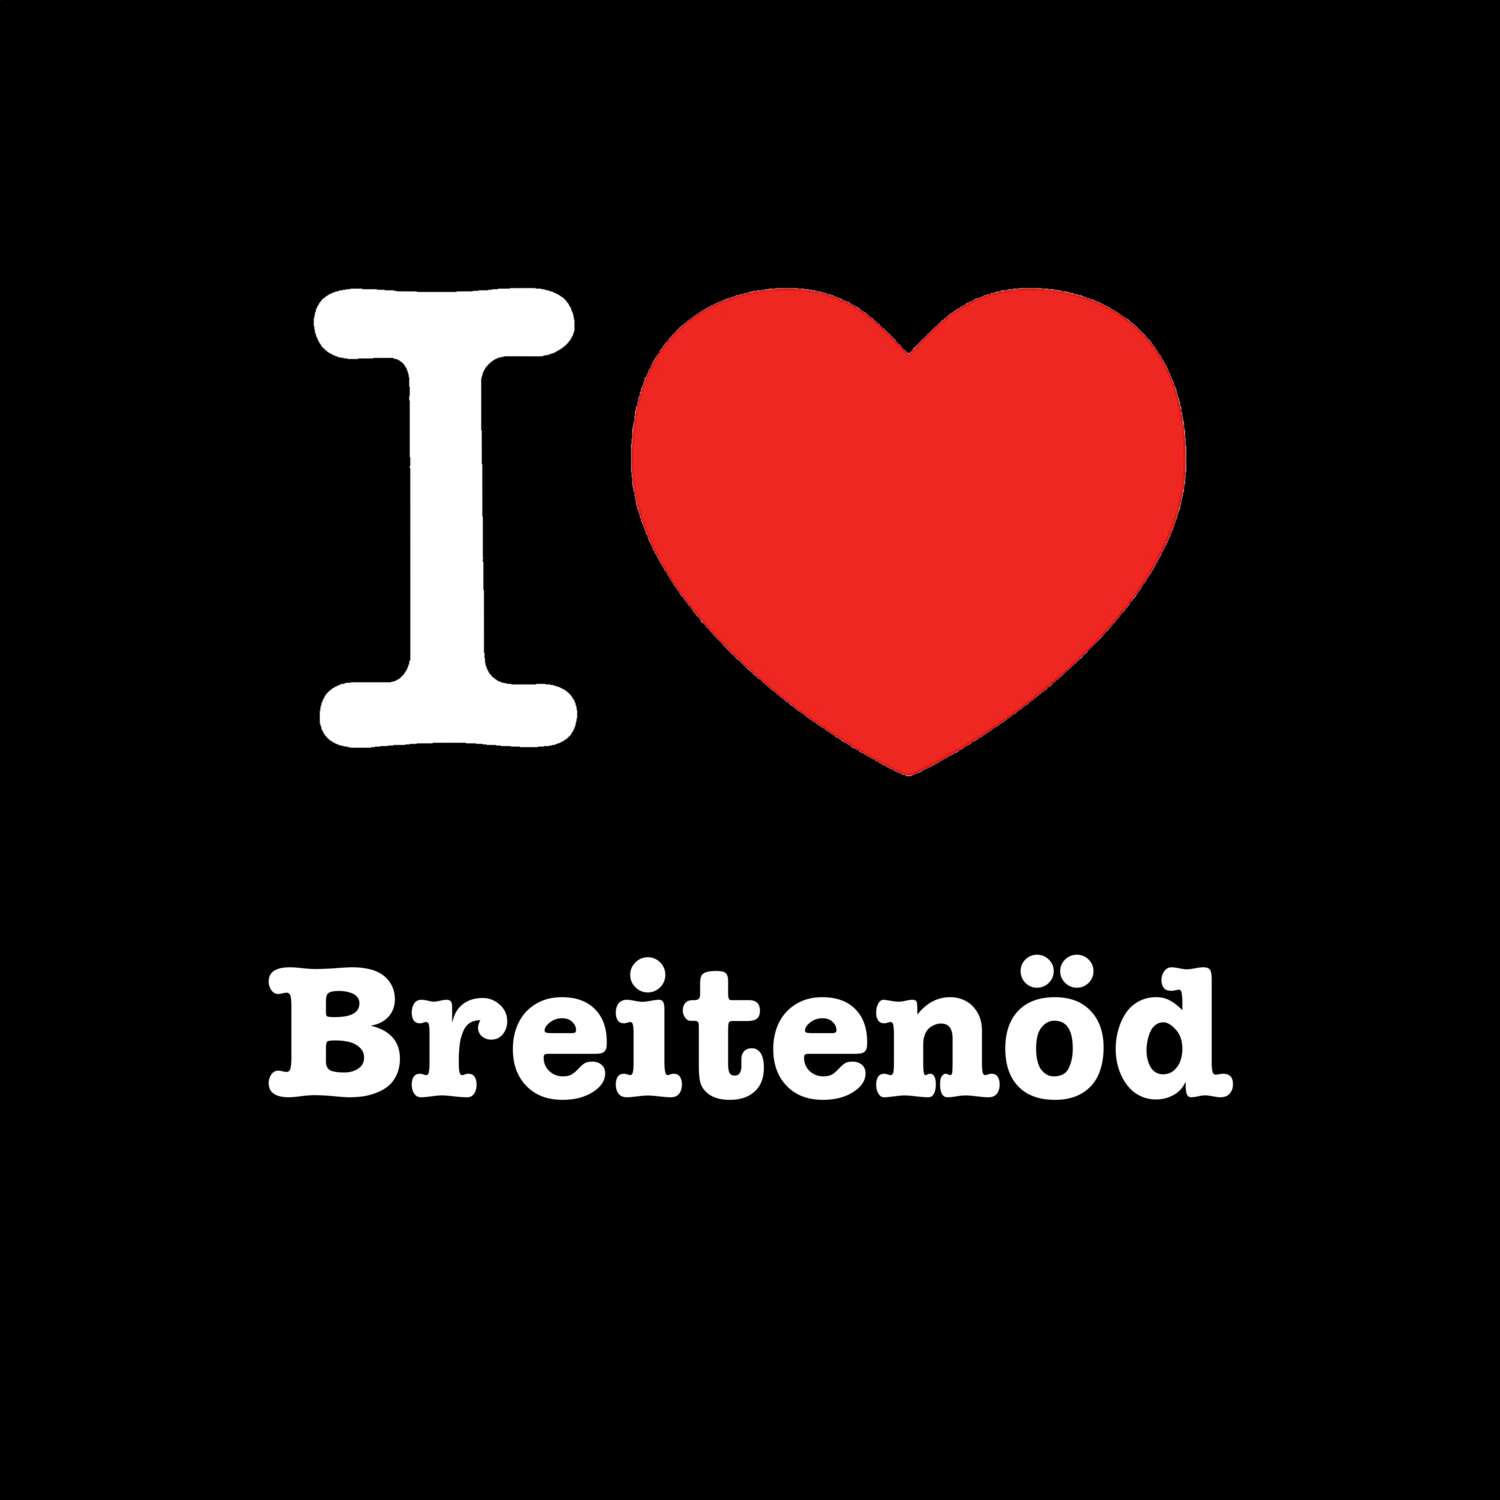 Breitenöd T-Shirt »I love«